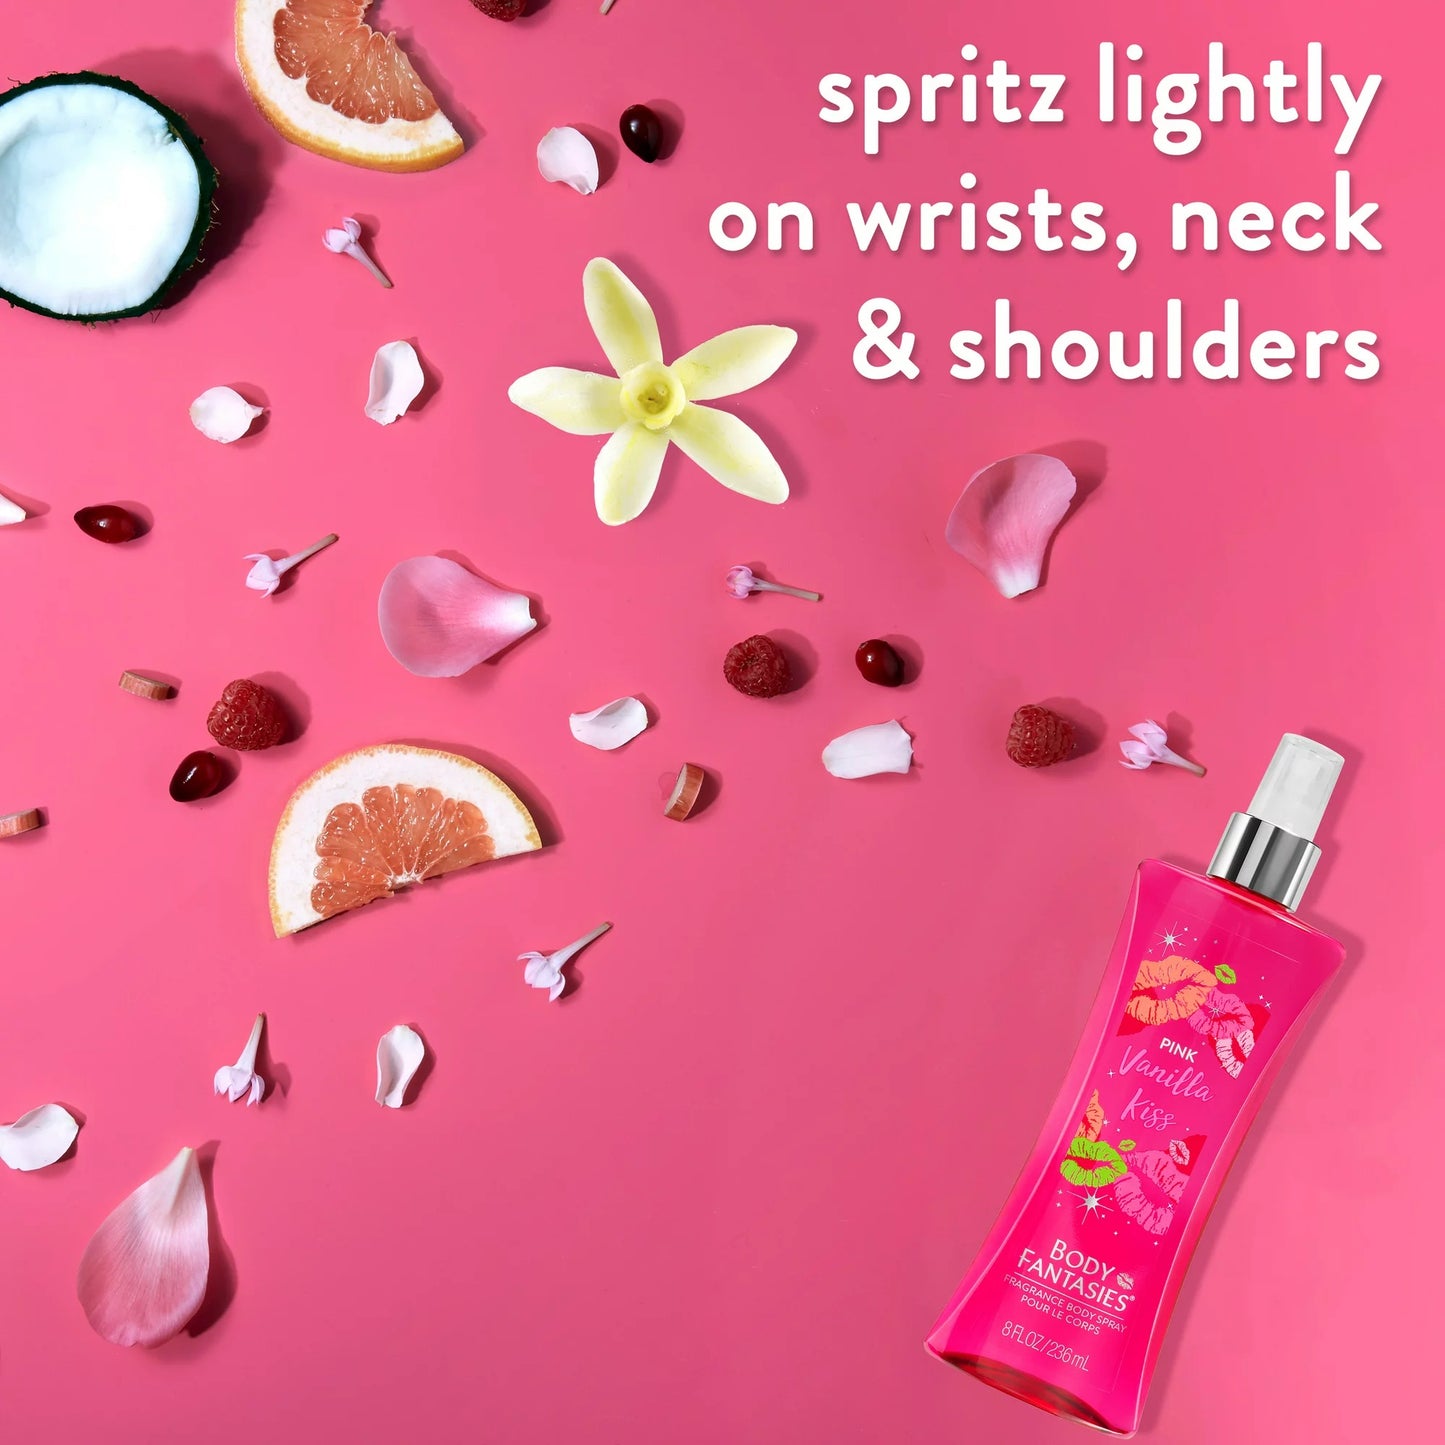 Body Fantasies Signature Fragrance Body Spray- Pink Vanilla Kiss 236ml